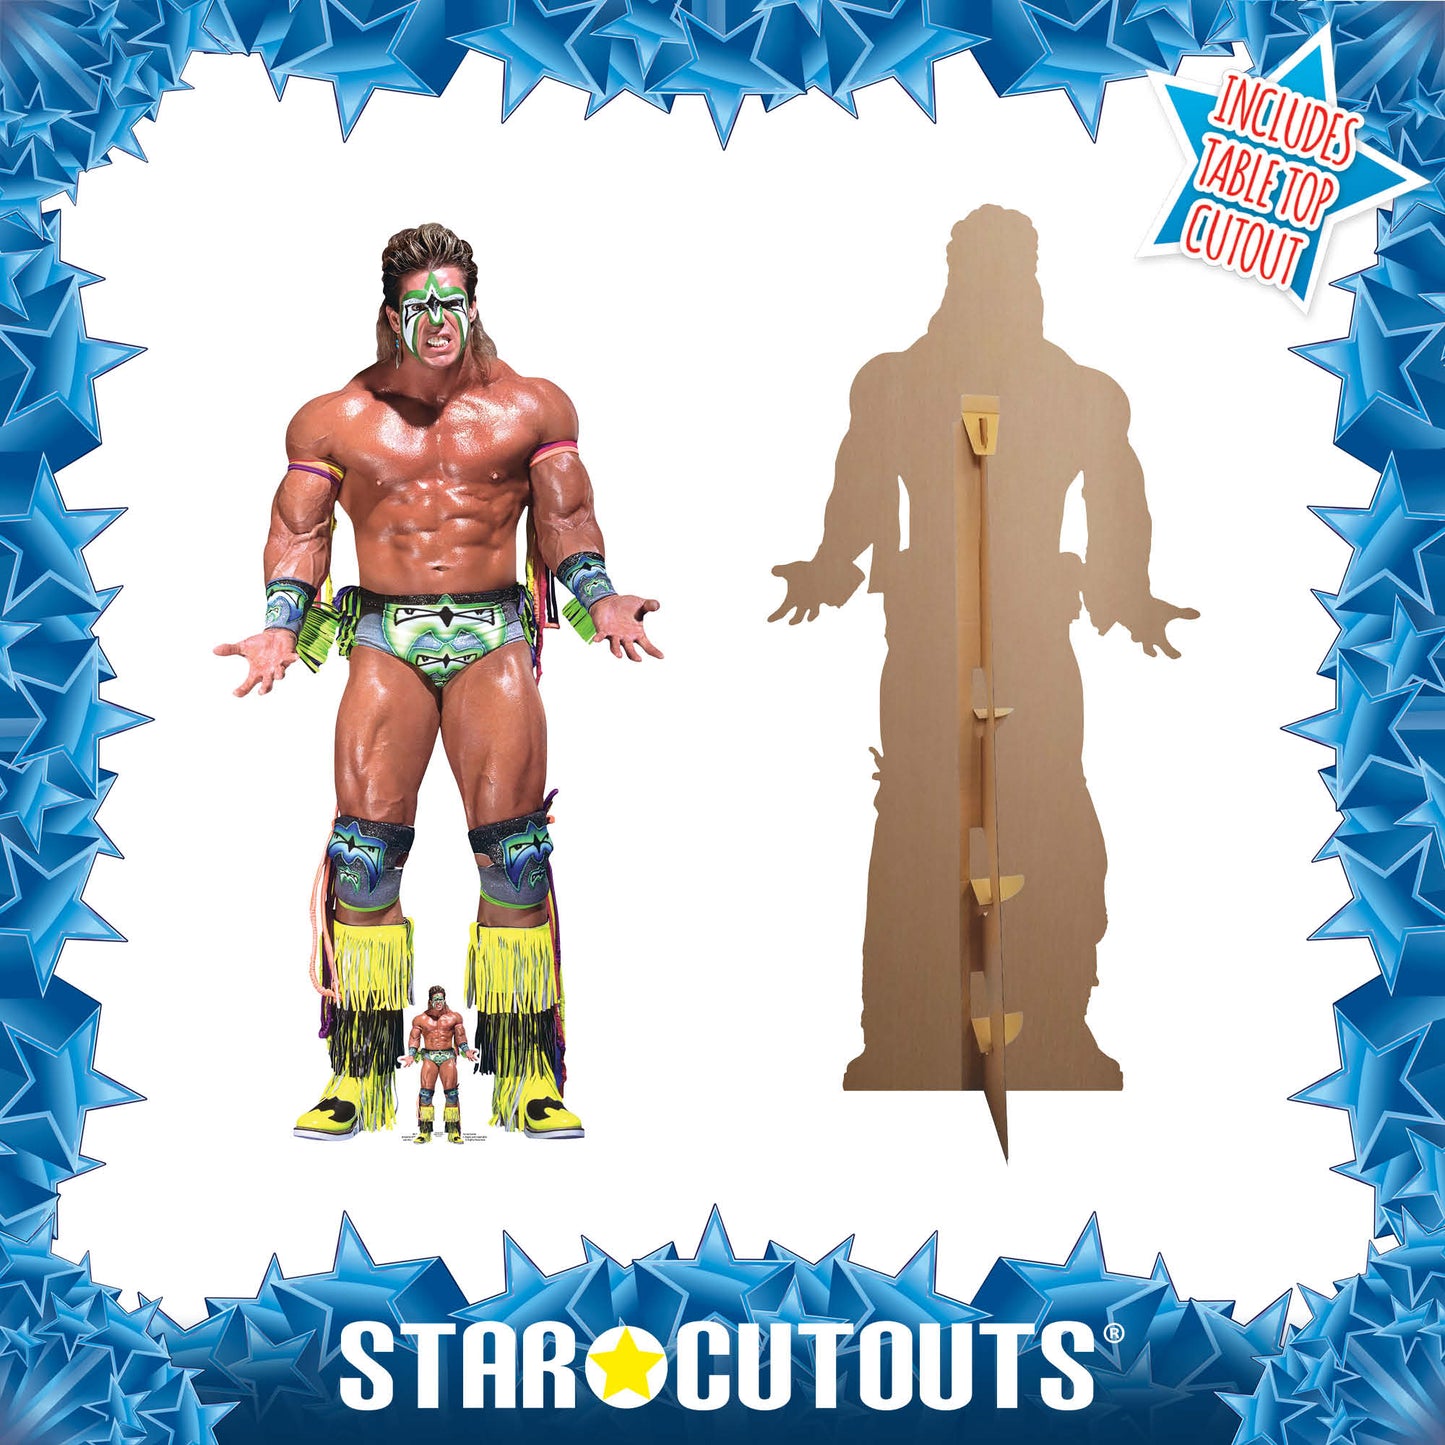 The Ultimate Warrior WWE Cardboard Cutout